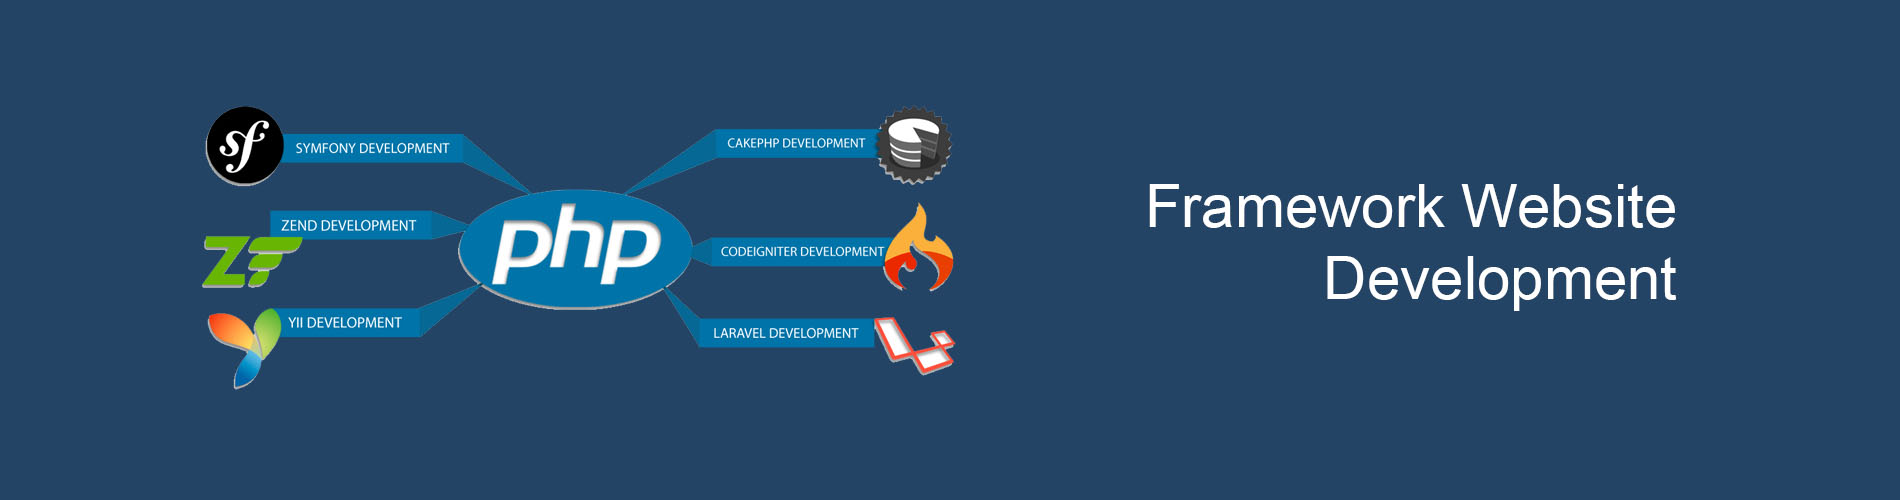 framework-website-development-company